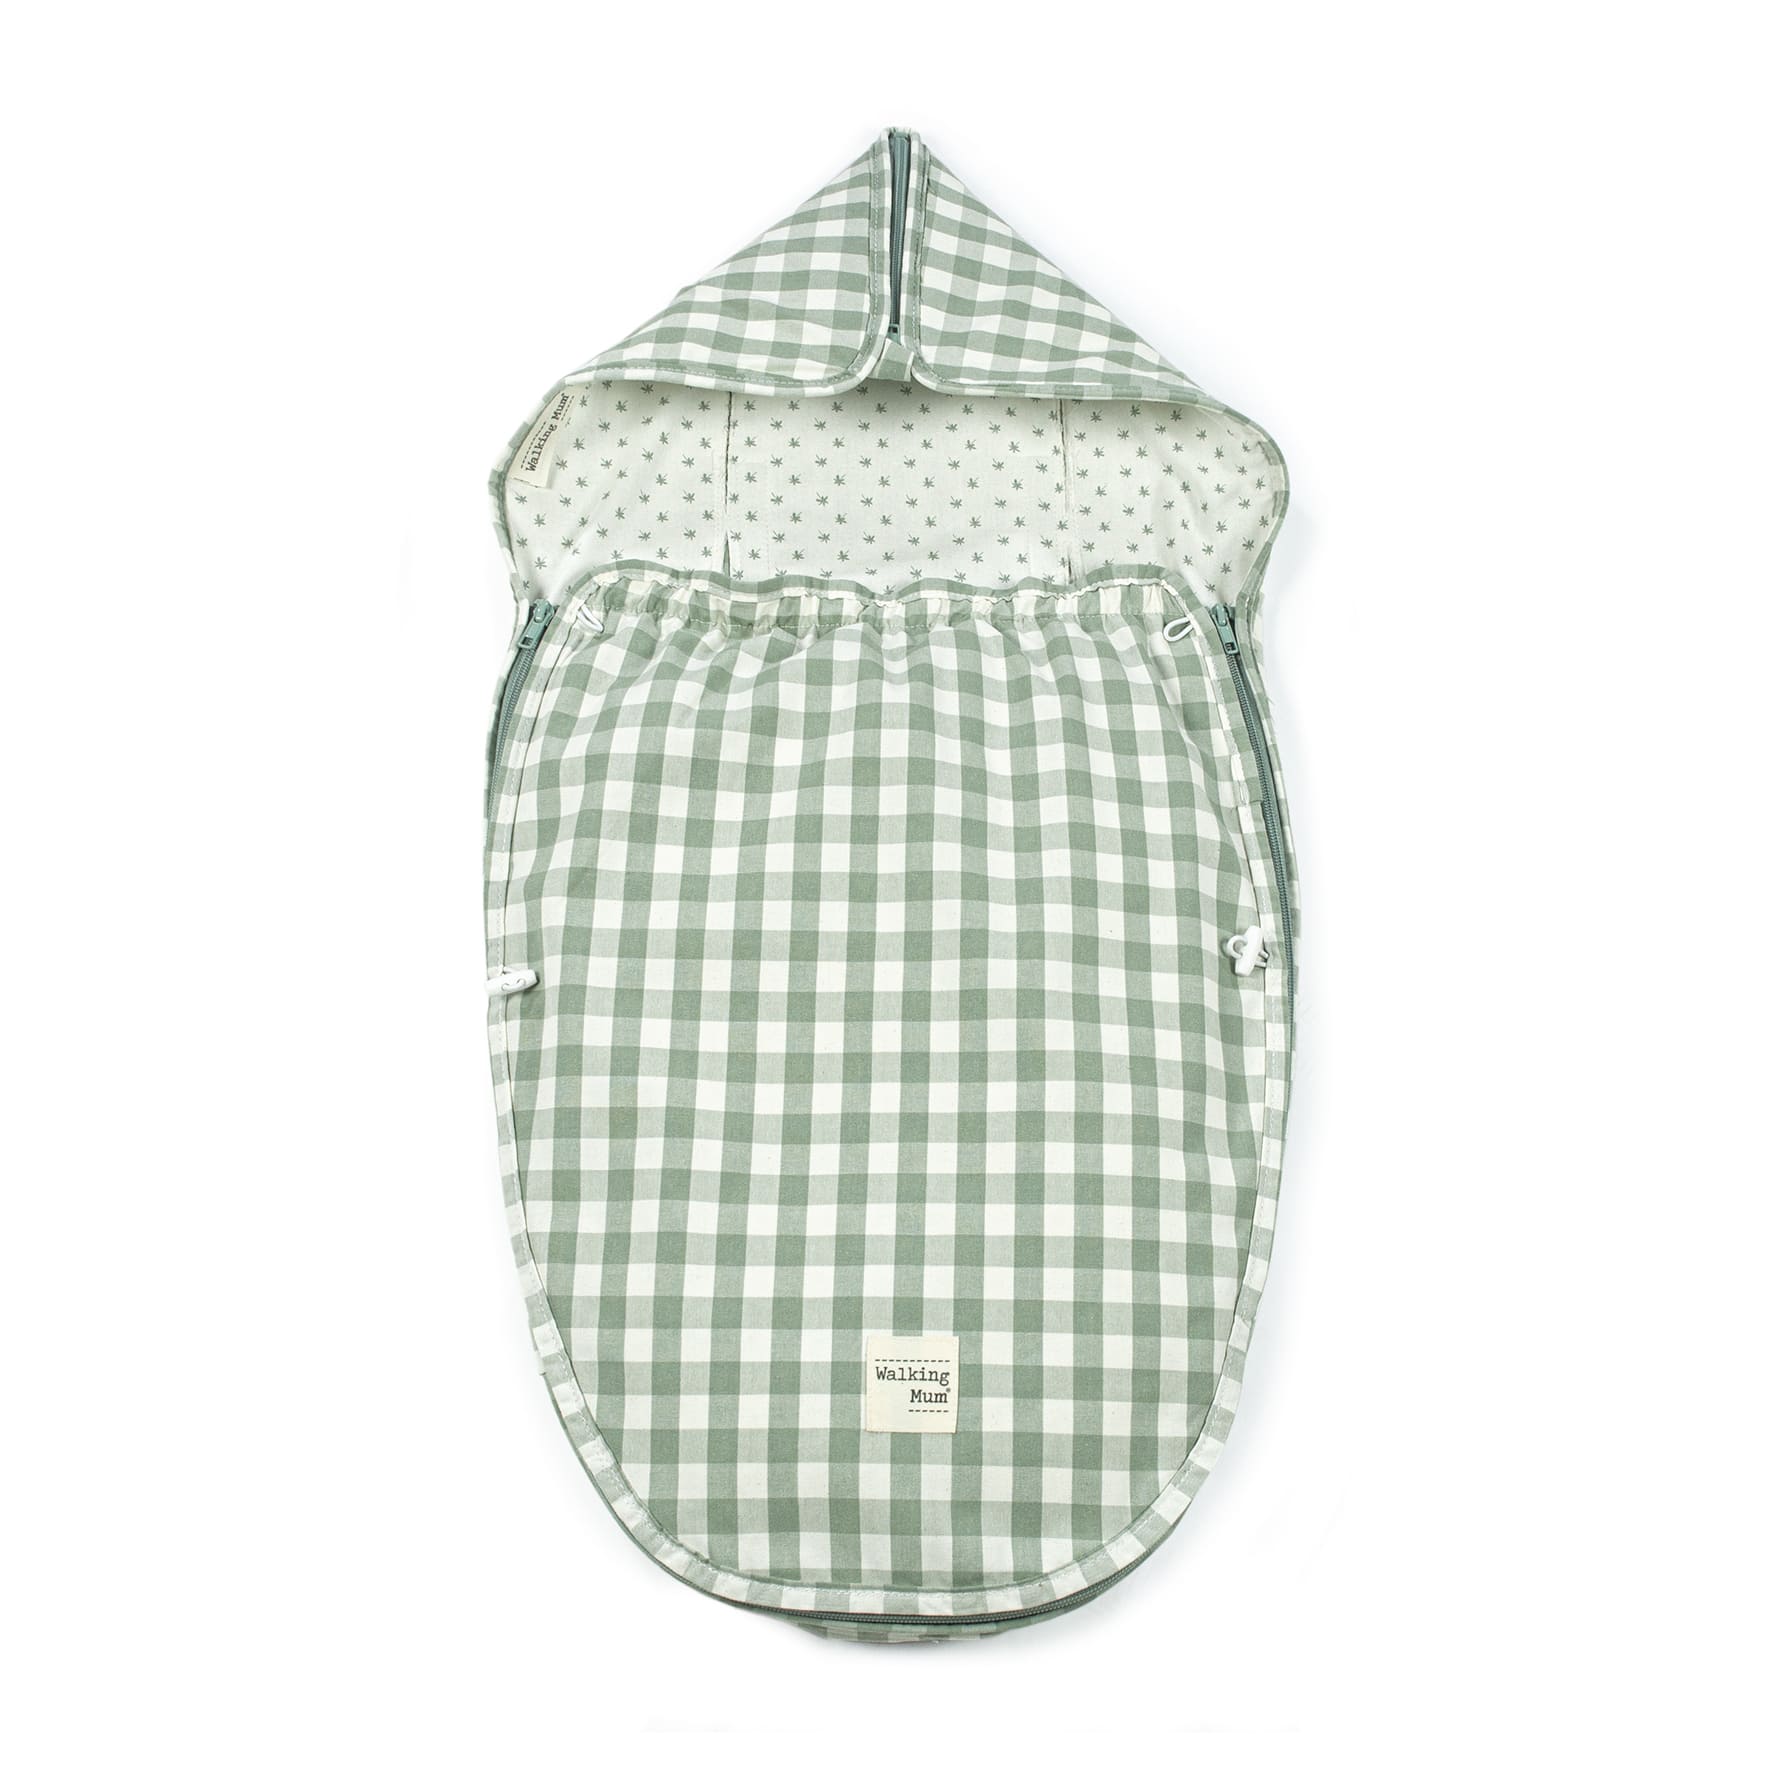 Compra online tu saco para carrito de bebe de manta morellana